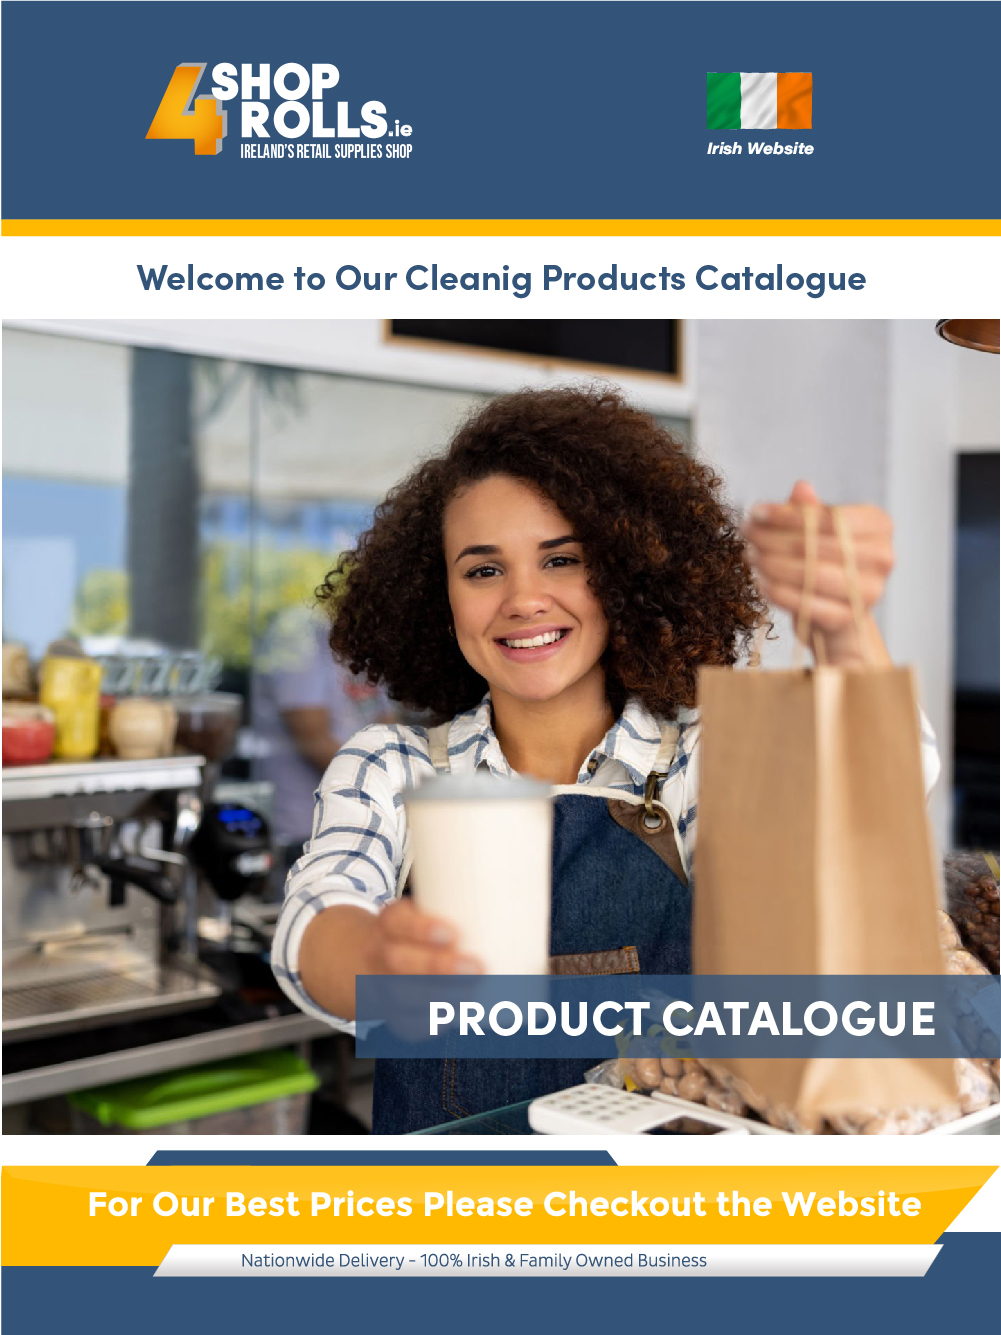 Product Catalogue